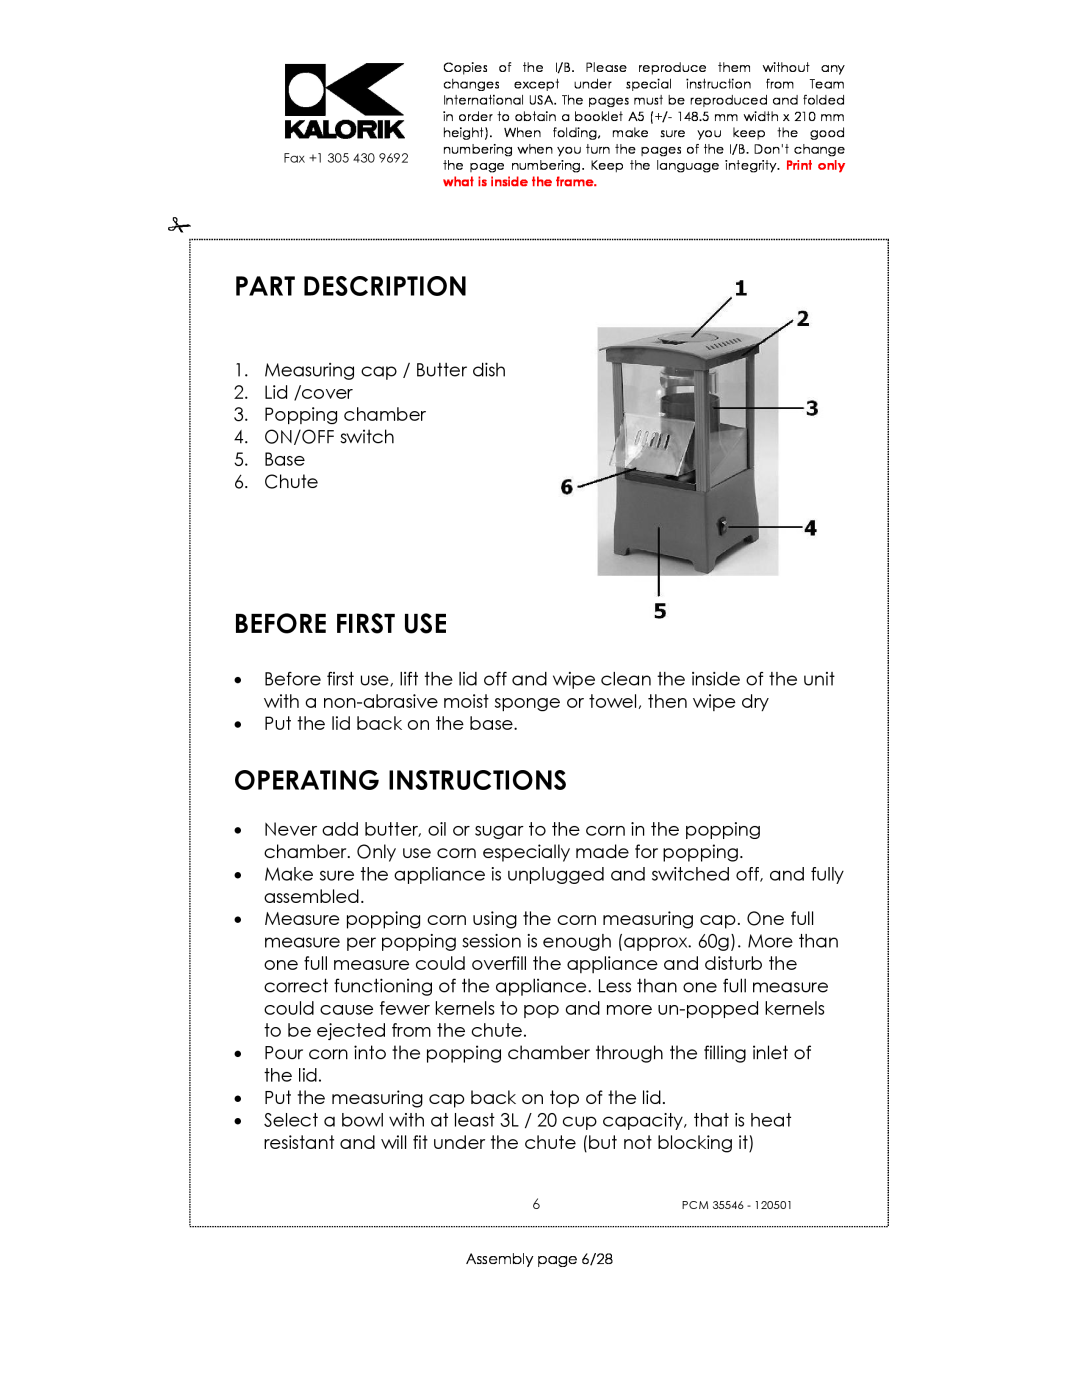 Kalorik PCM 35546 manual Part Description, Before First Use, Operating Instructions 